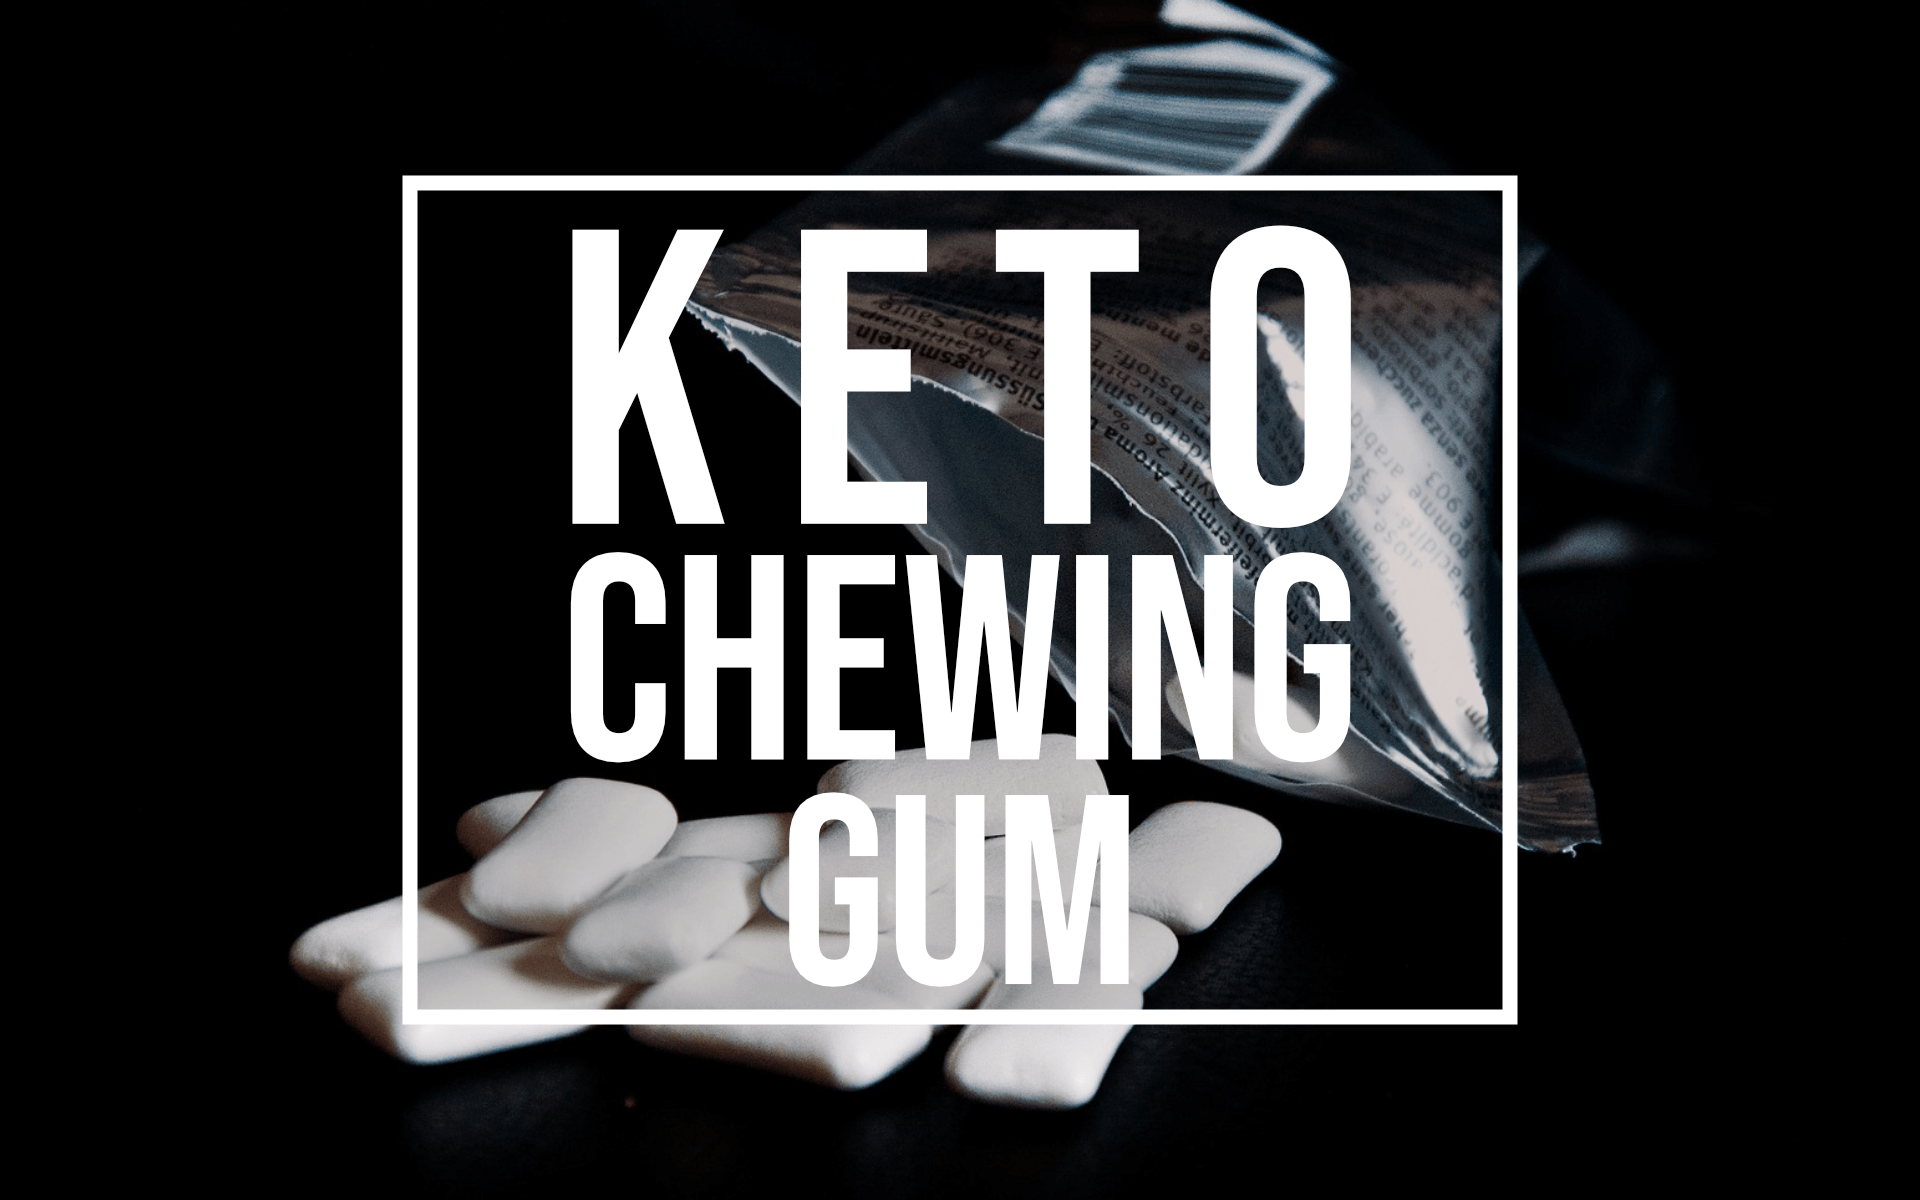 keto chewing gum